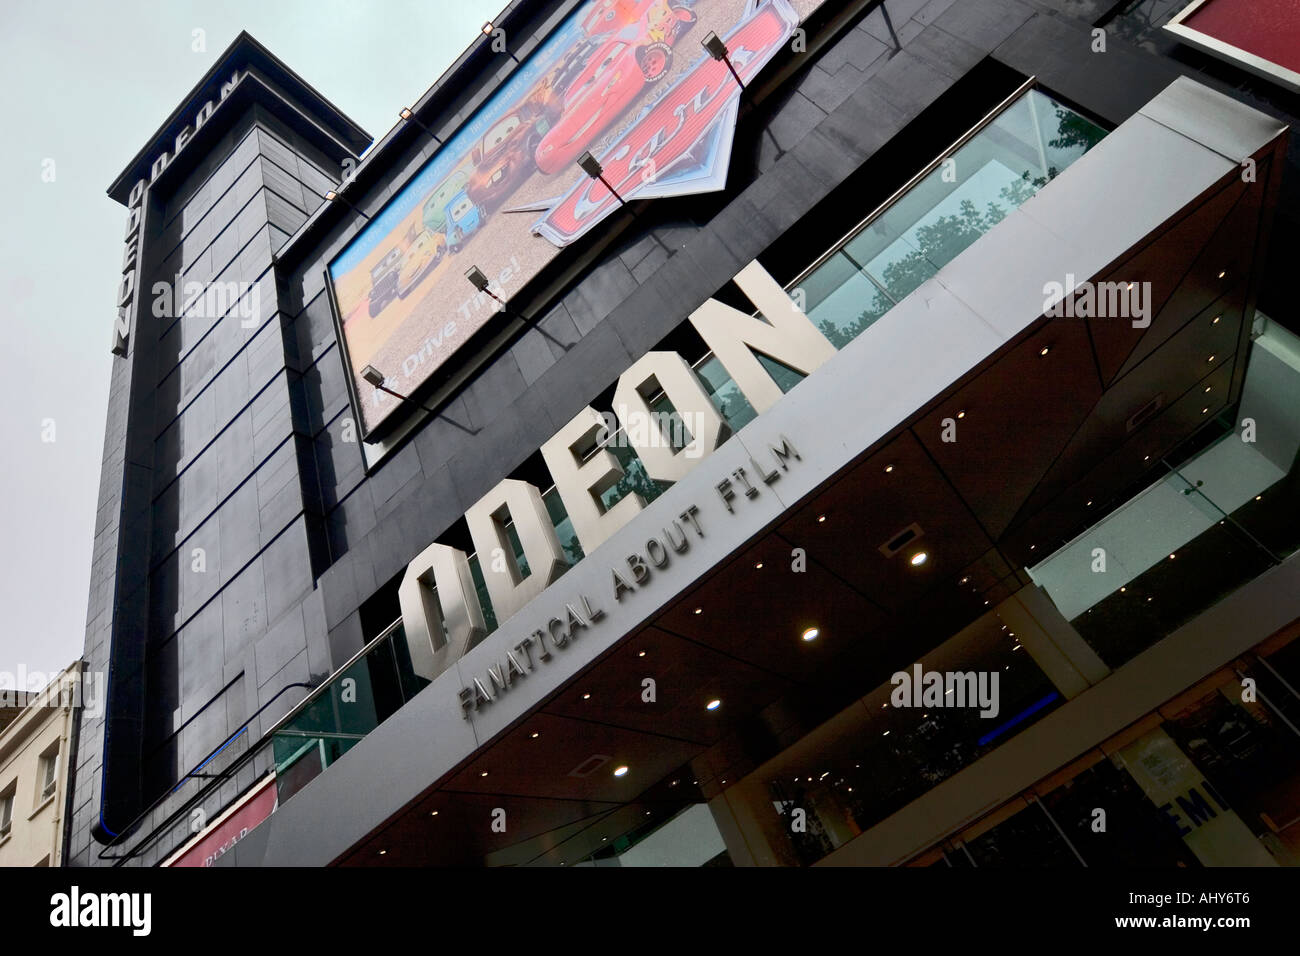 Odeon cinema Leicester Square London Stock Photo